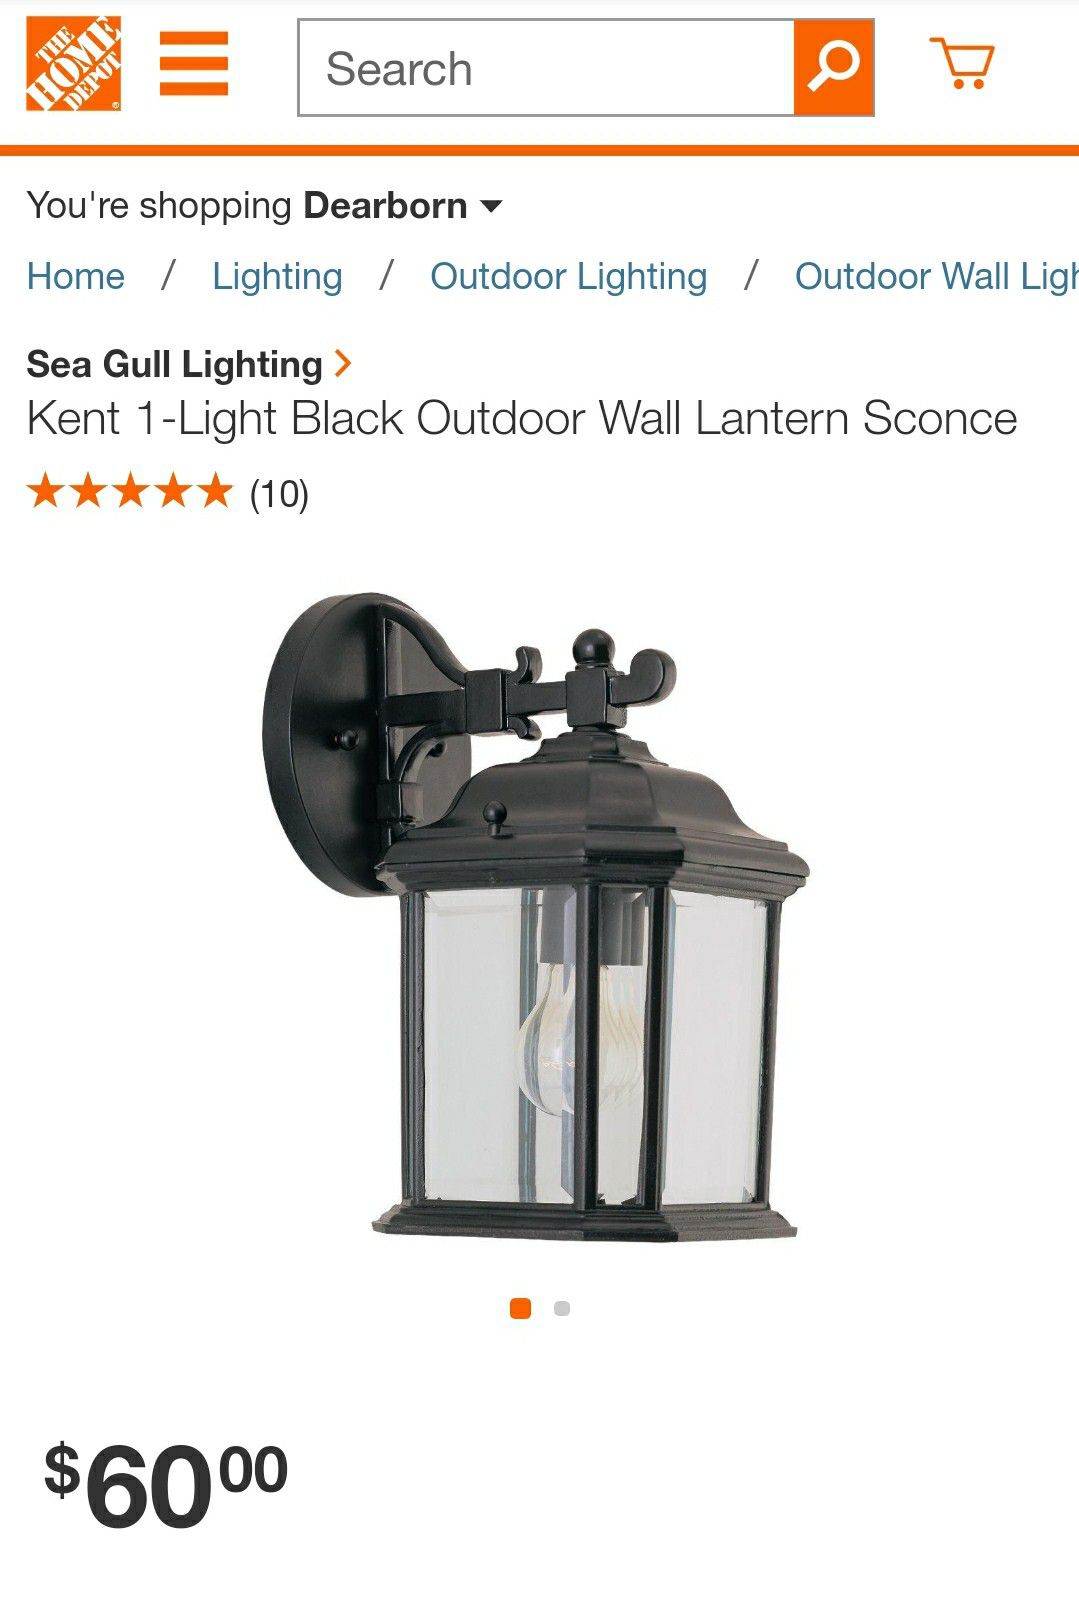 Sea gull, Kent 1-Light Black Outdoor Wall Lantern Sconce